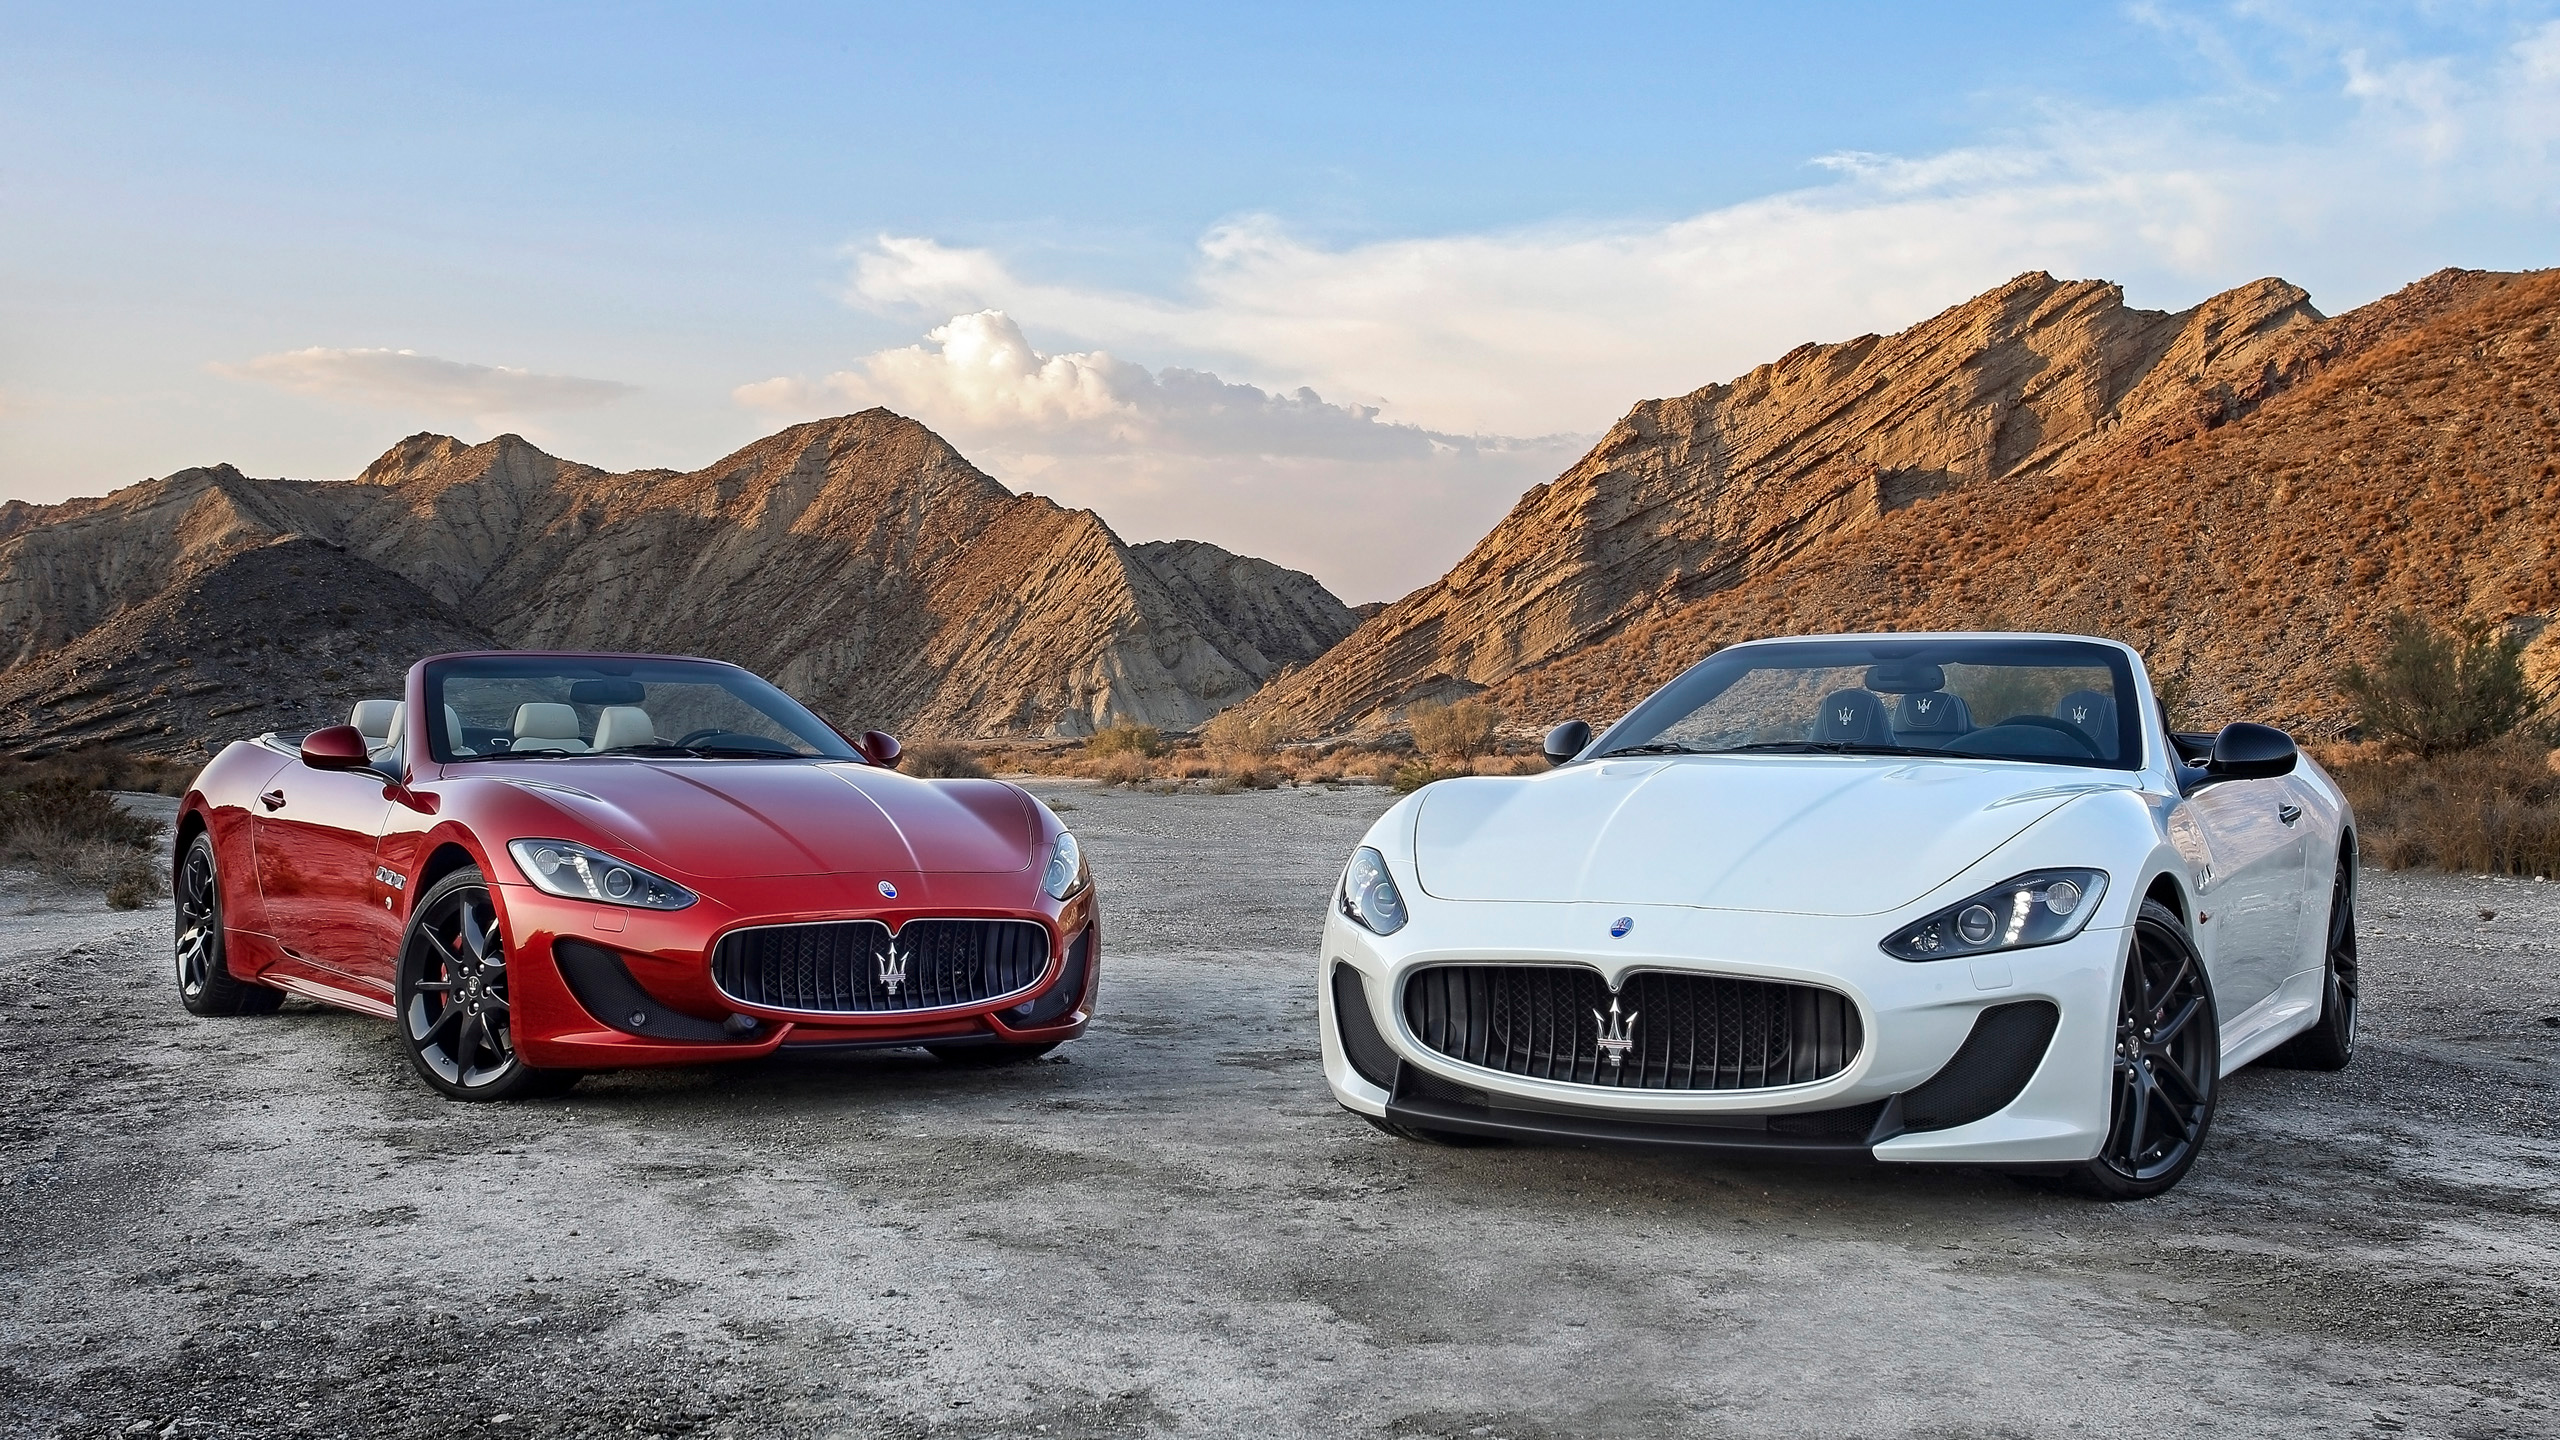 2014 Maserati GranCabrio MC Wallpaper | HD Car Wallpapers ...